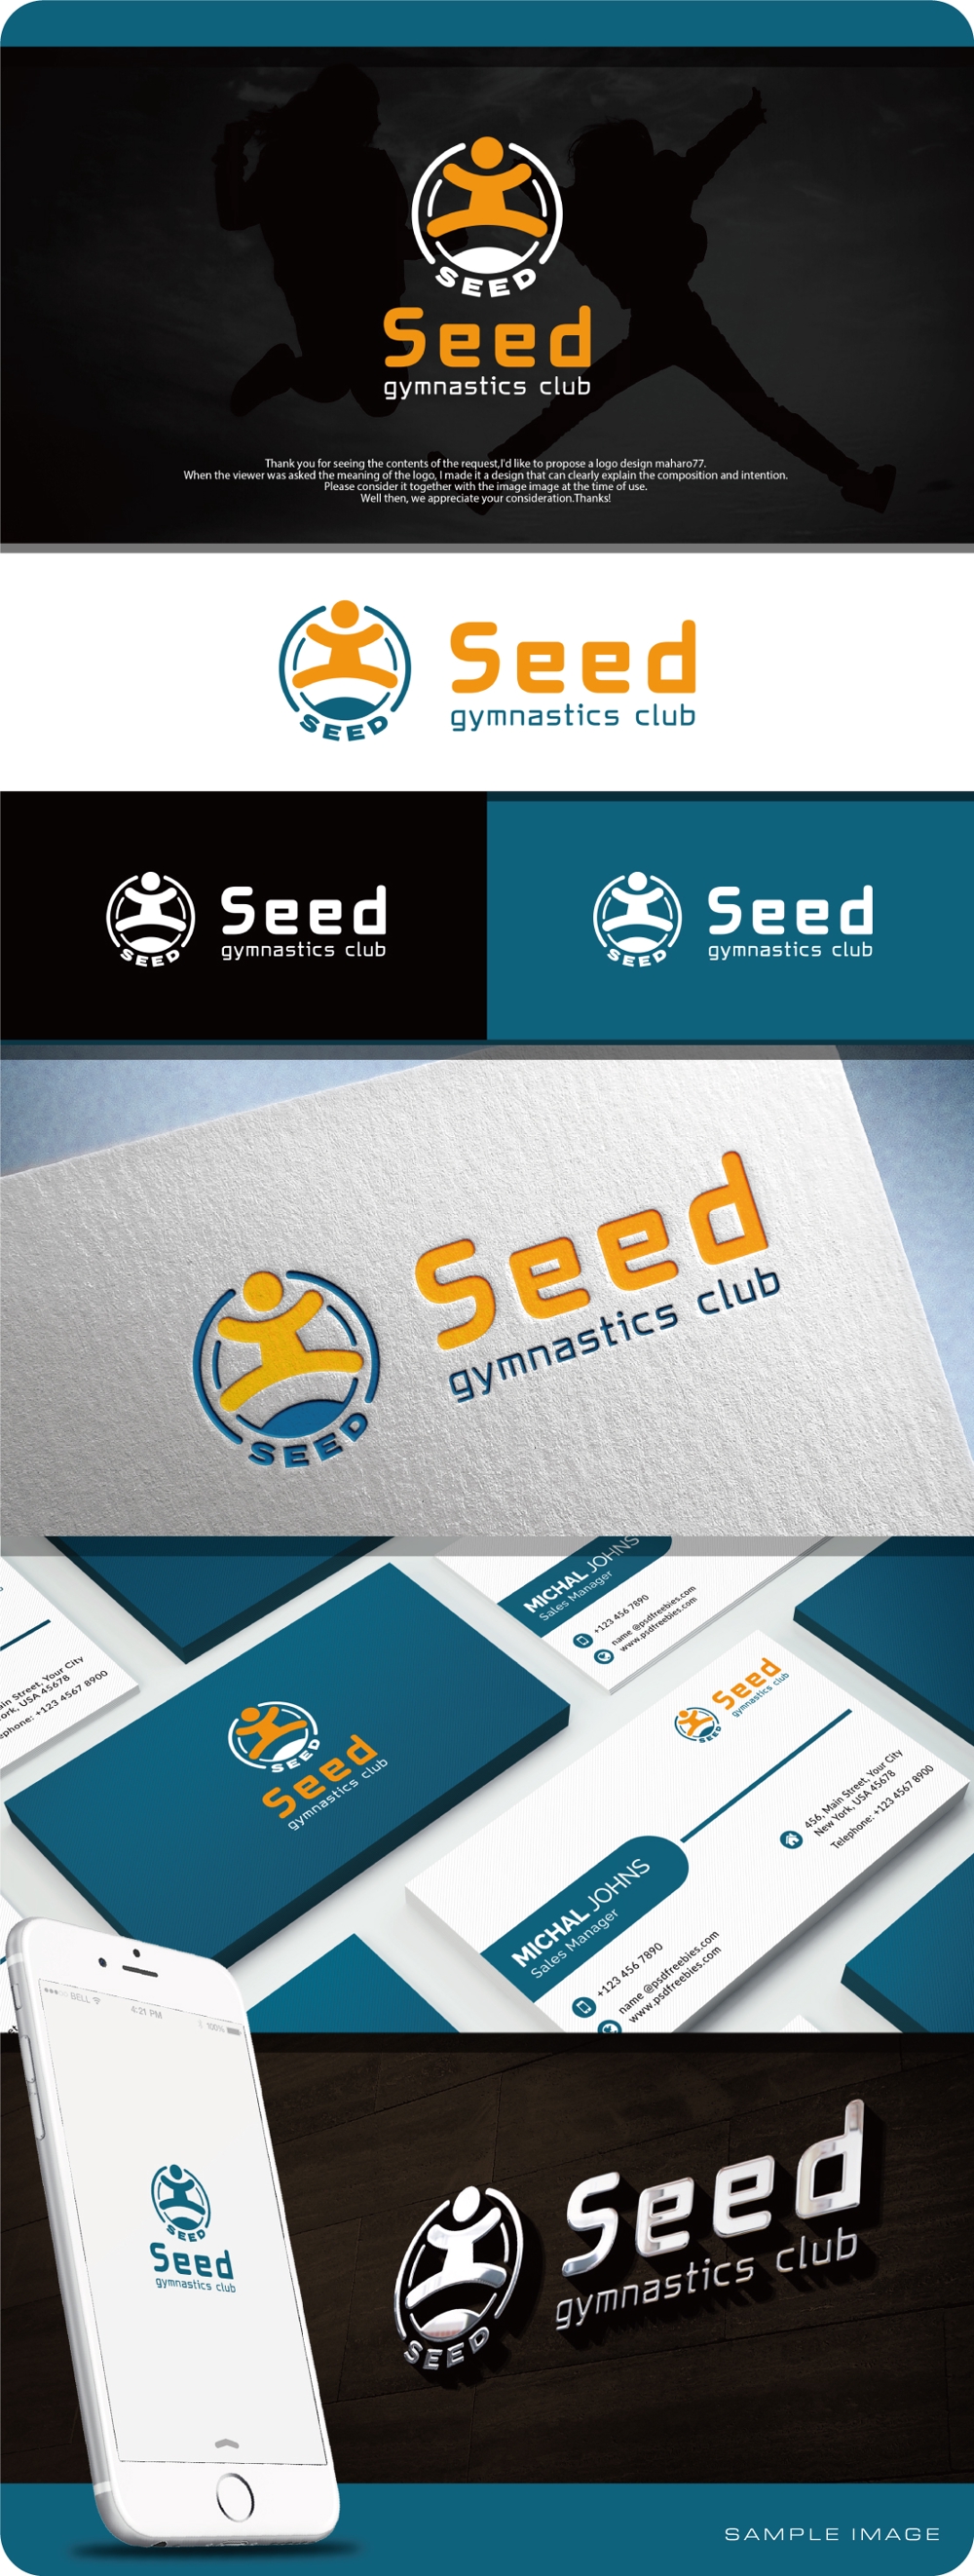 Seed-gymnastics-club様_04.jpg